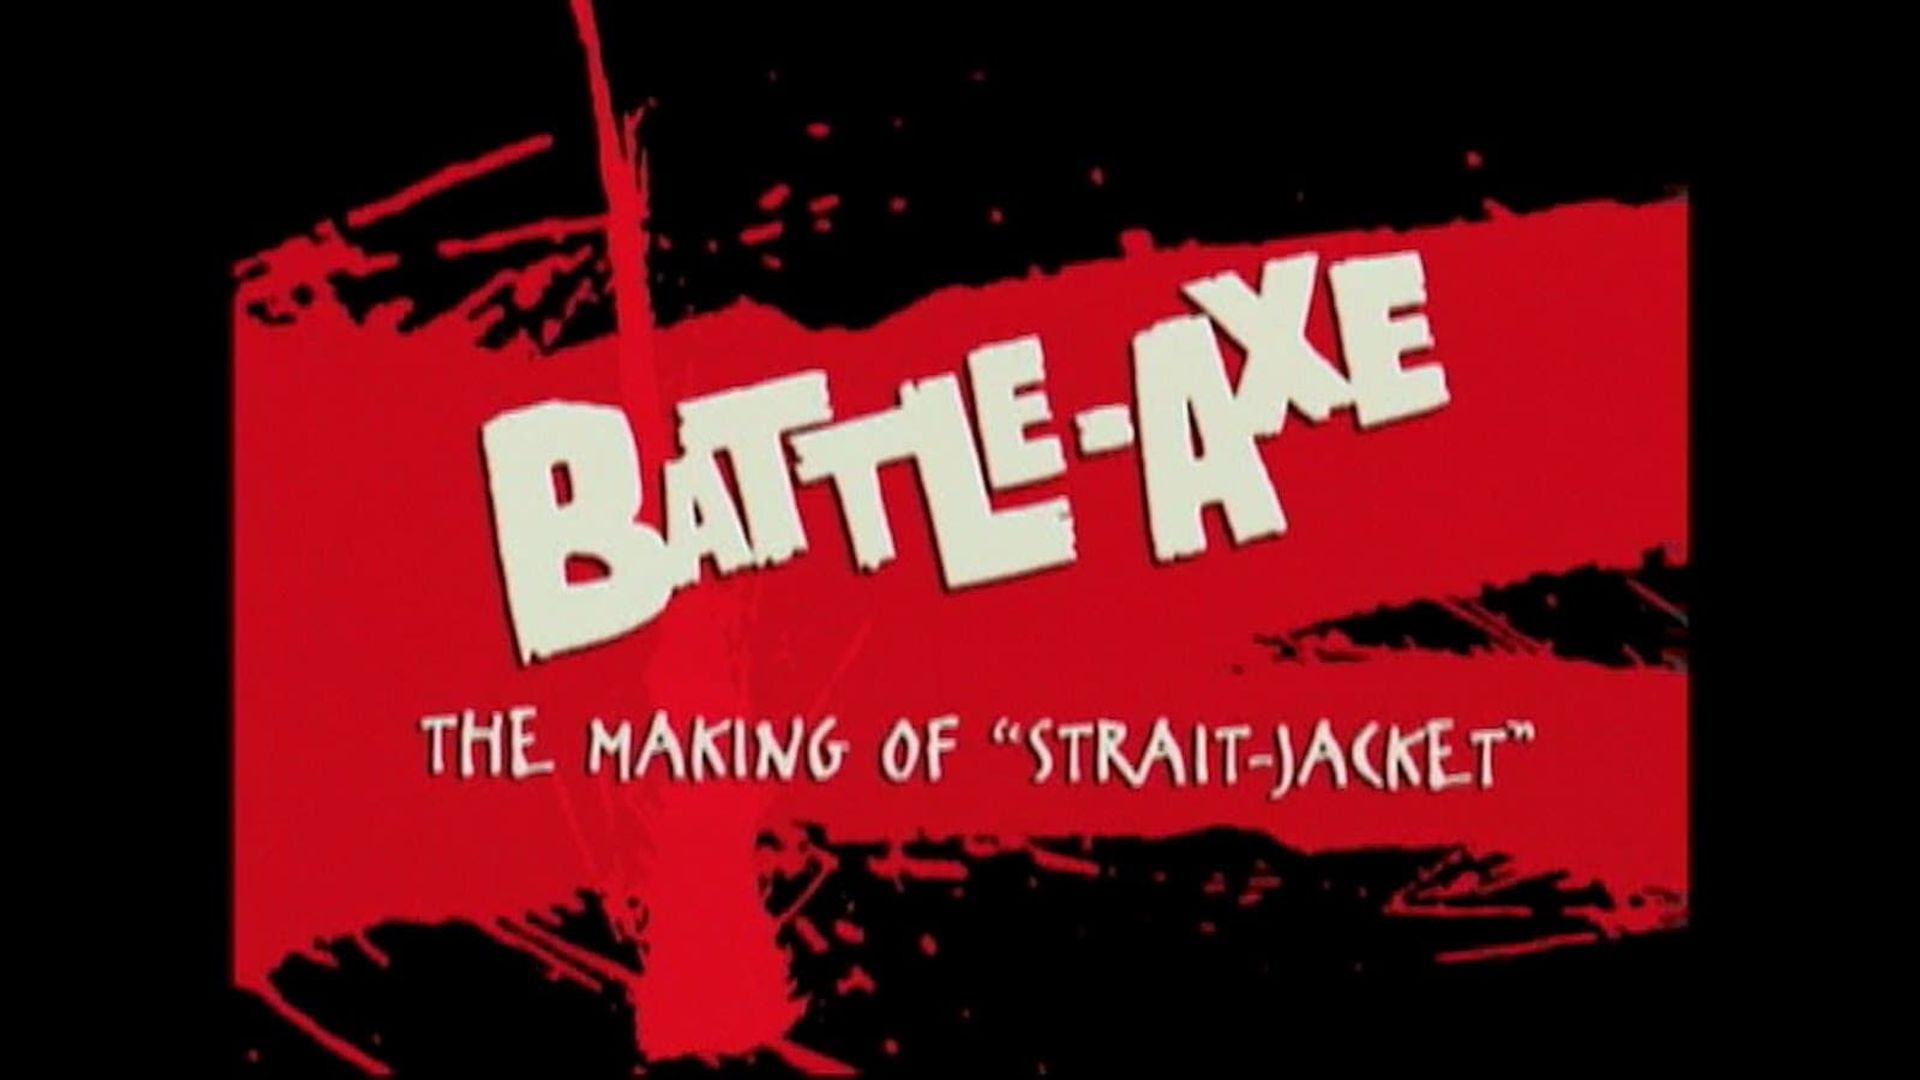 Battle-Axe: The Making of 'Strait-Jacket' background